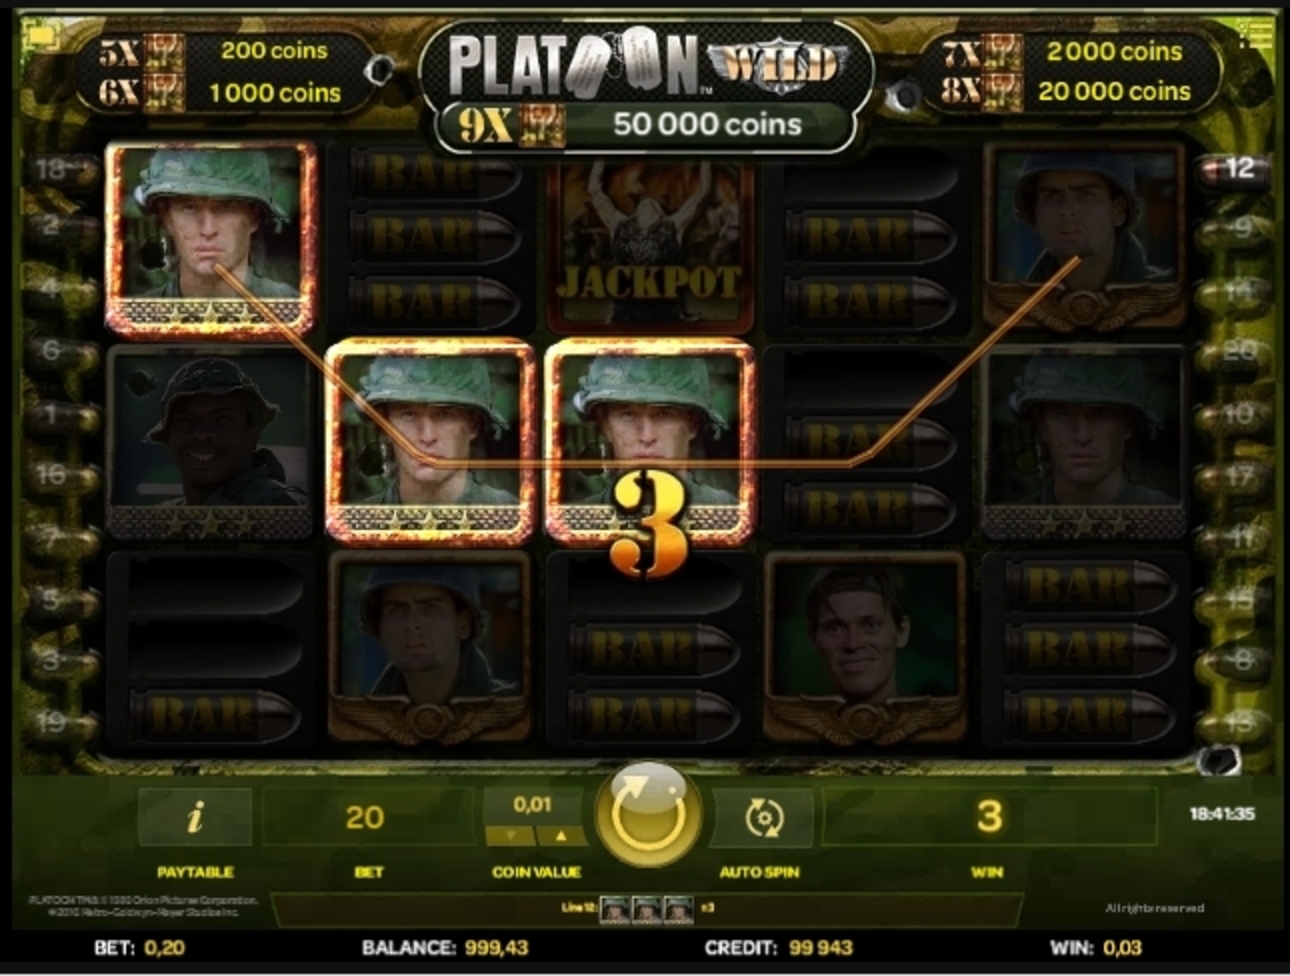 Win Money in Platoon Wild Free Slot Game by iSoftBet